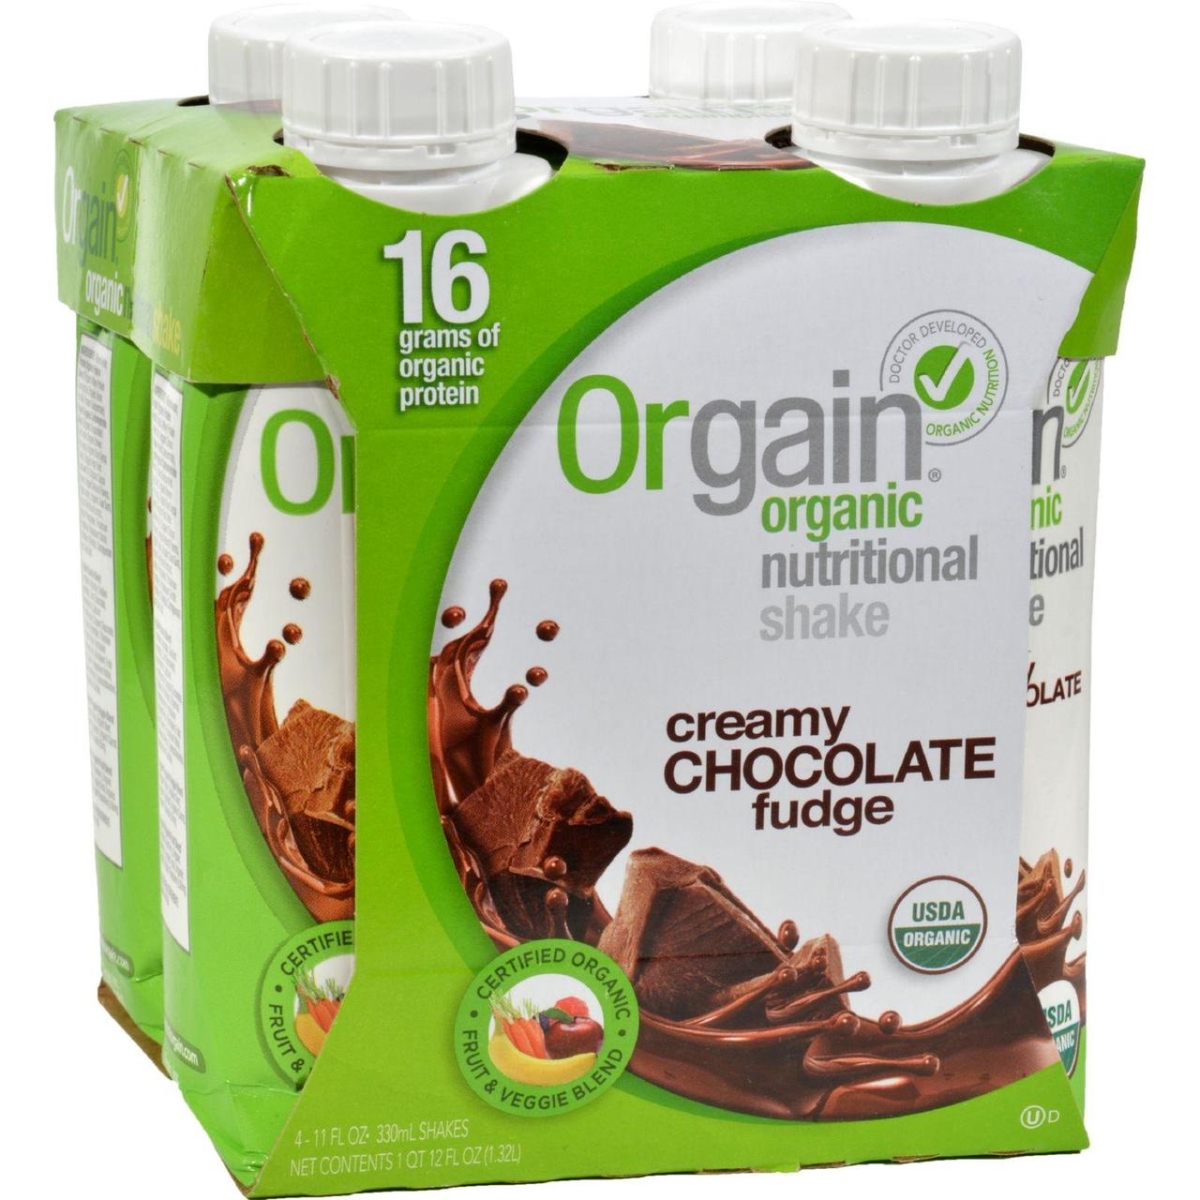 Hg1083419 11 Fl Oz Organic Nutrition Shake - Chocolate Fudge, Case Of 12